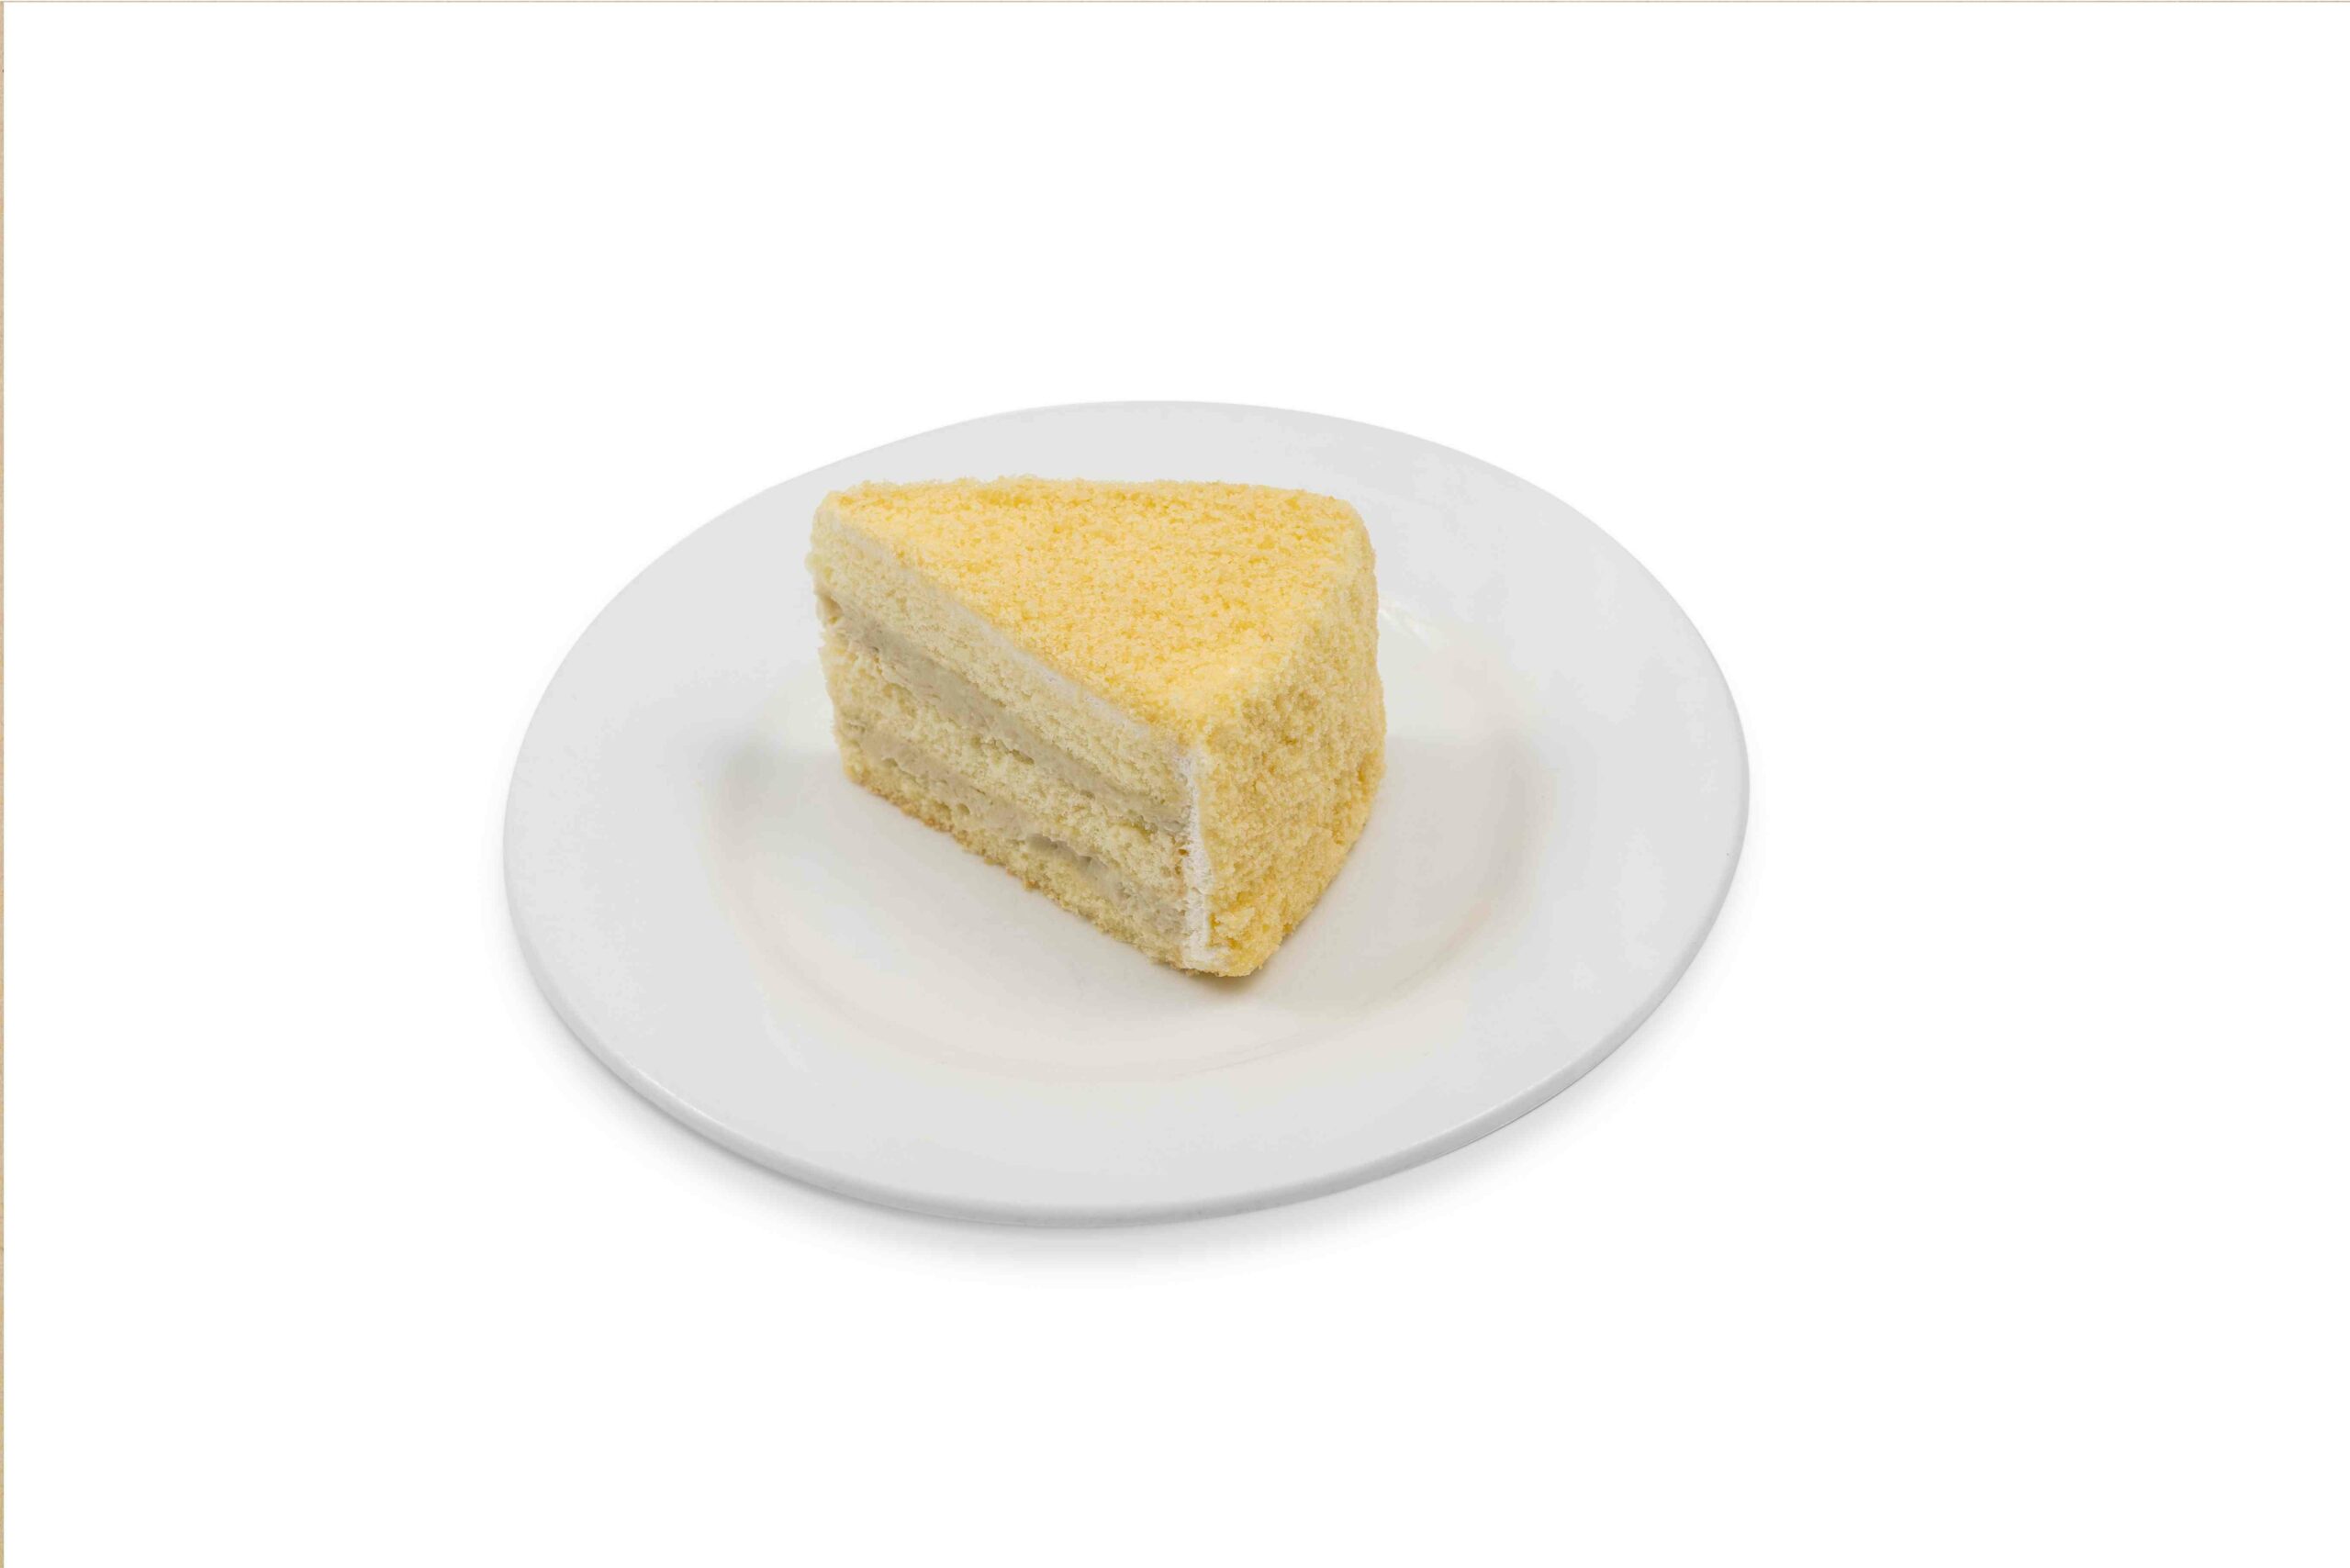 ikea - durian cream cake